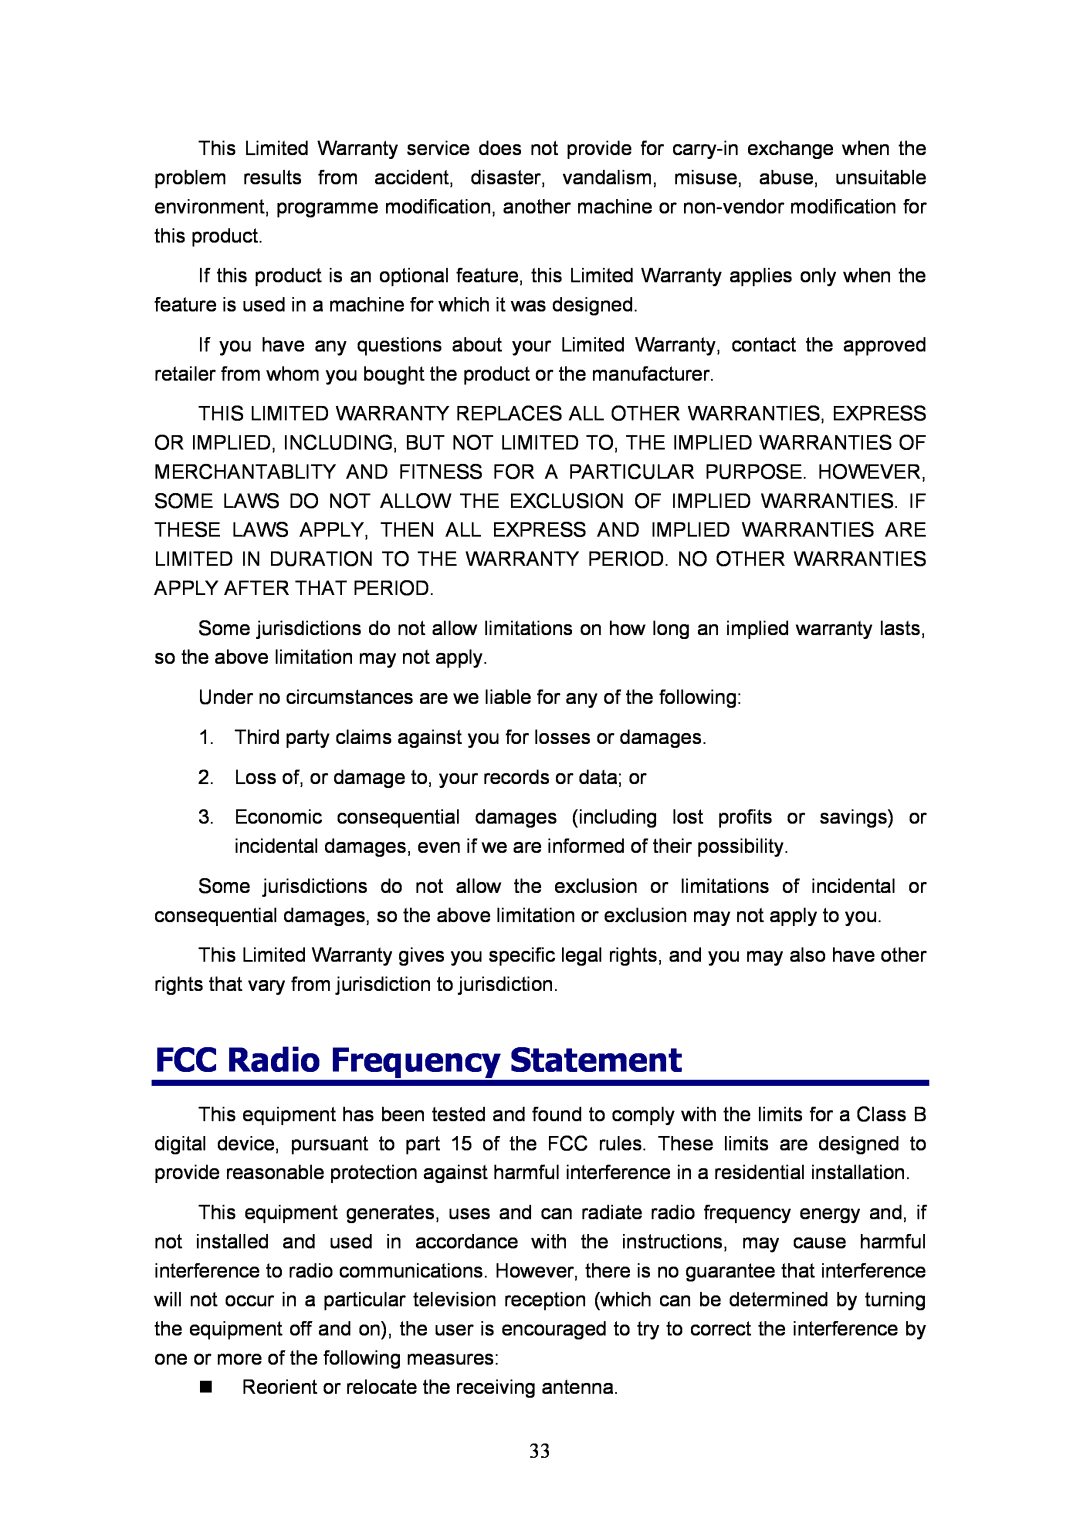 Plustek MobileOffice Scanner, D600 manual FCC Radio Frequency Statement 